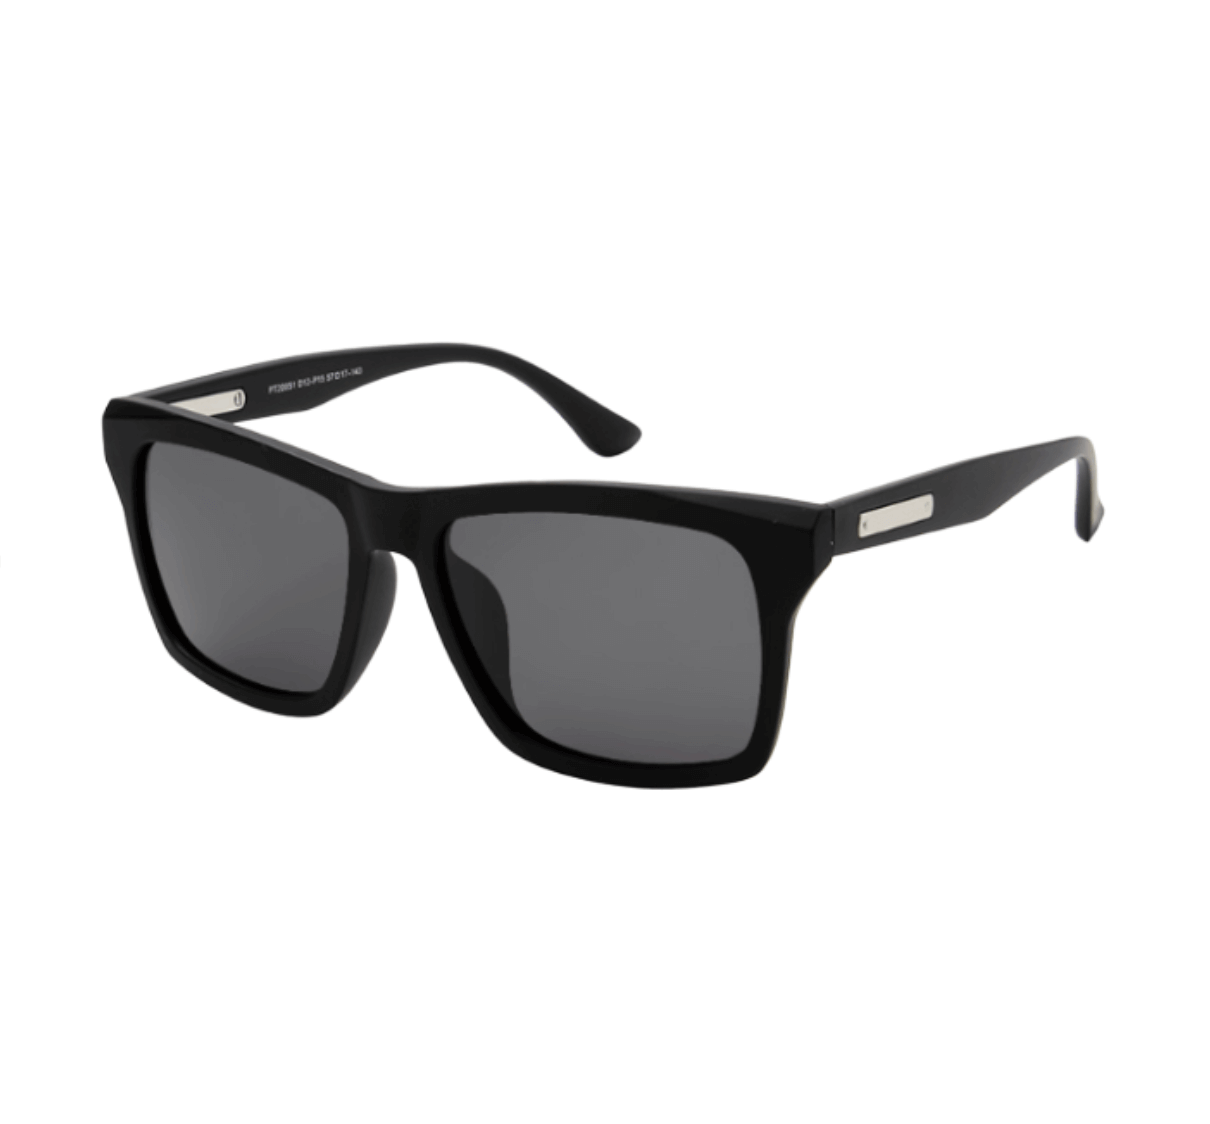 cheap custom plastic sunglasses, customized sunglasses in bulk, custom sunglasses manufacturers China, custom sunglasses suppliers, Sunglasses Manufacturer in China